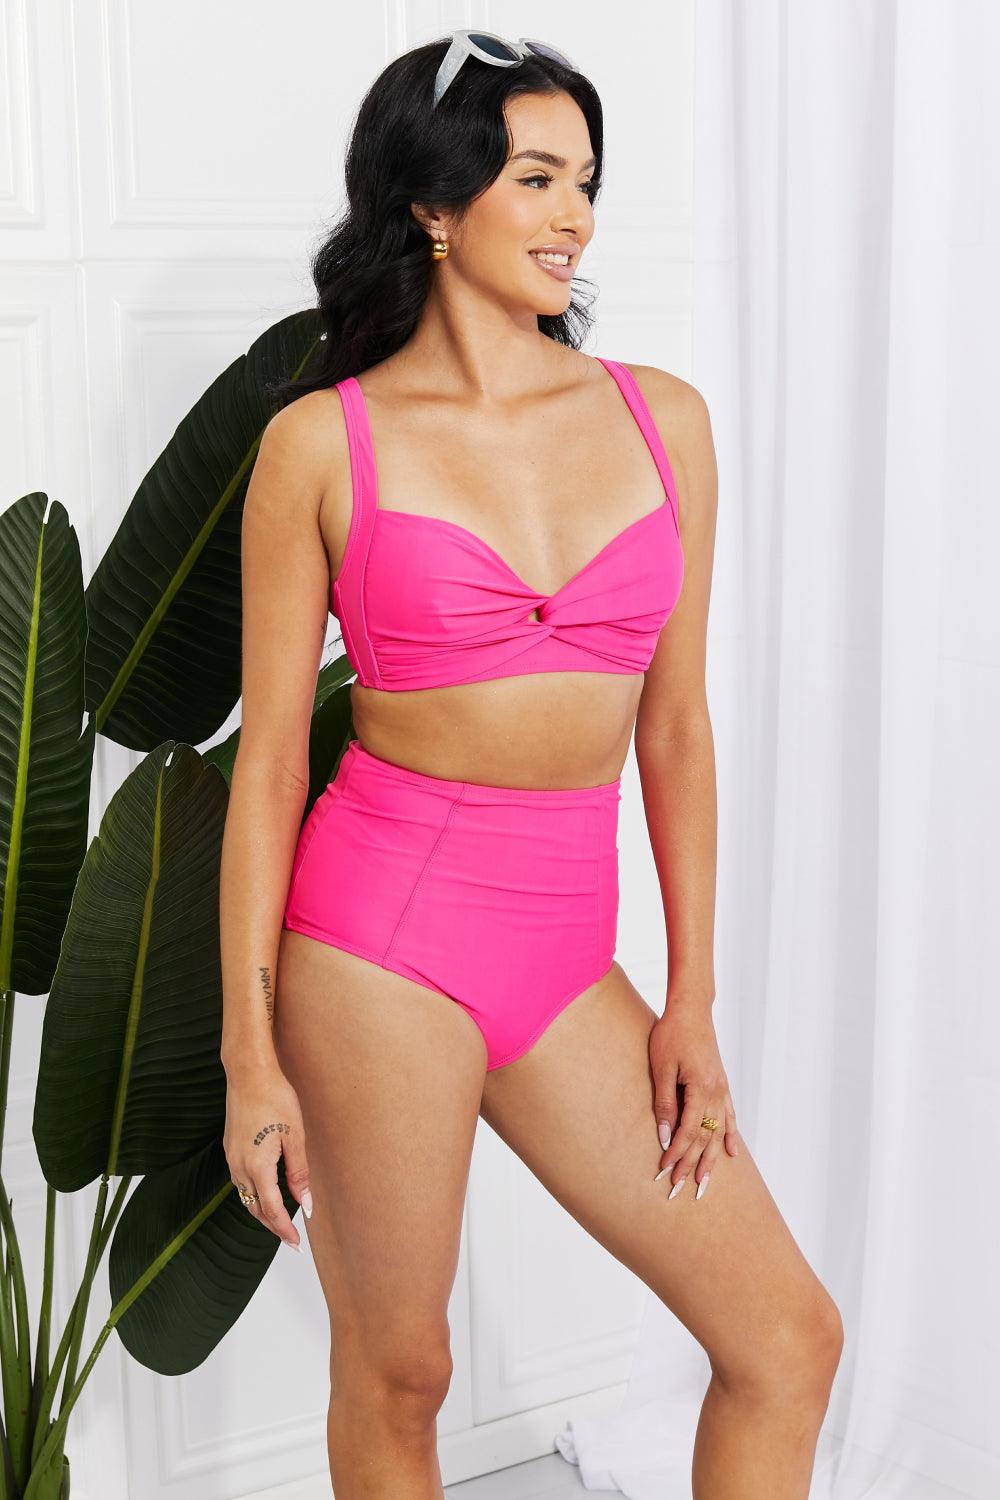 Marina West Swim Take A Dip Twist High-Rise Bikini in Pink - Glamorous Boutique USA L.L.C.